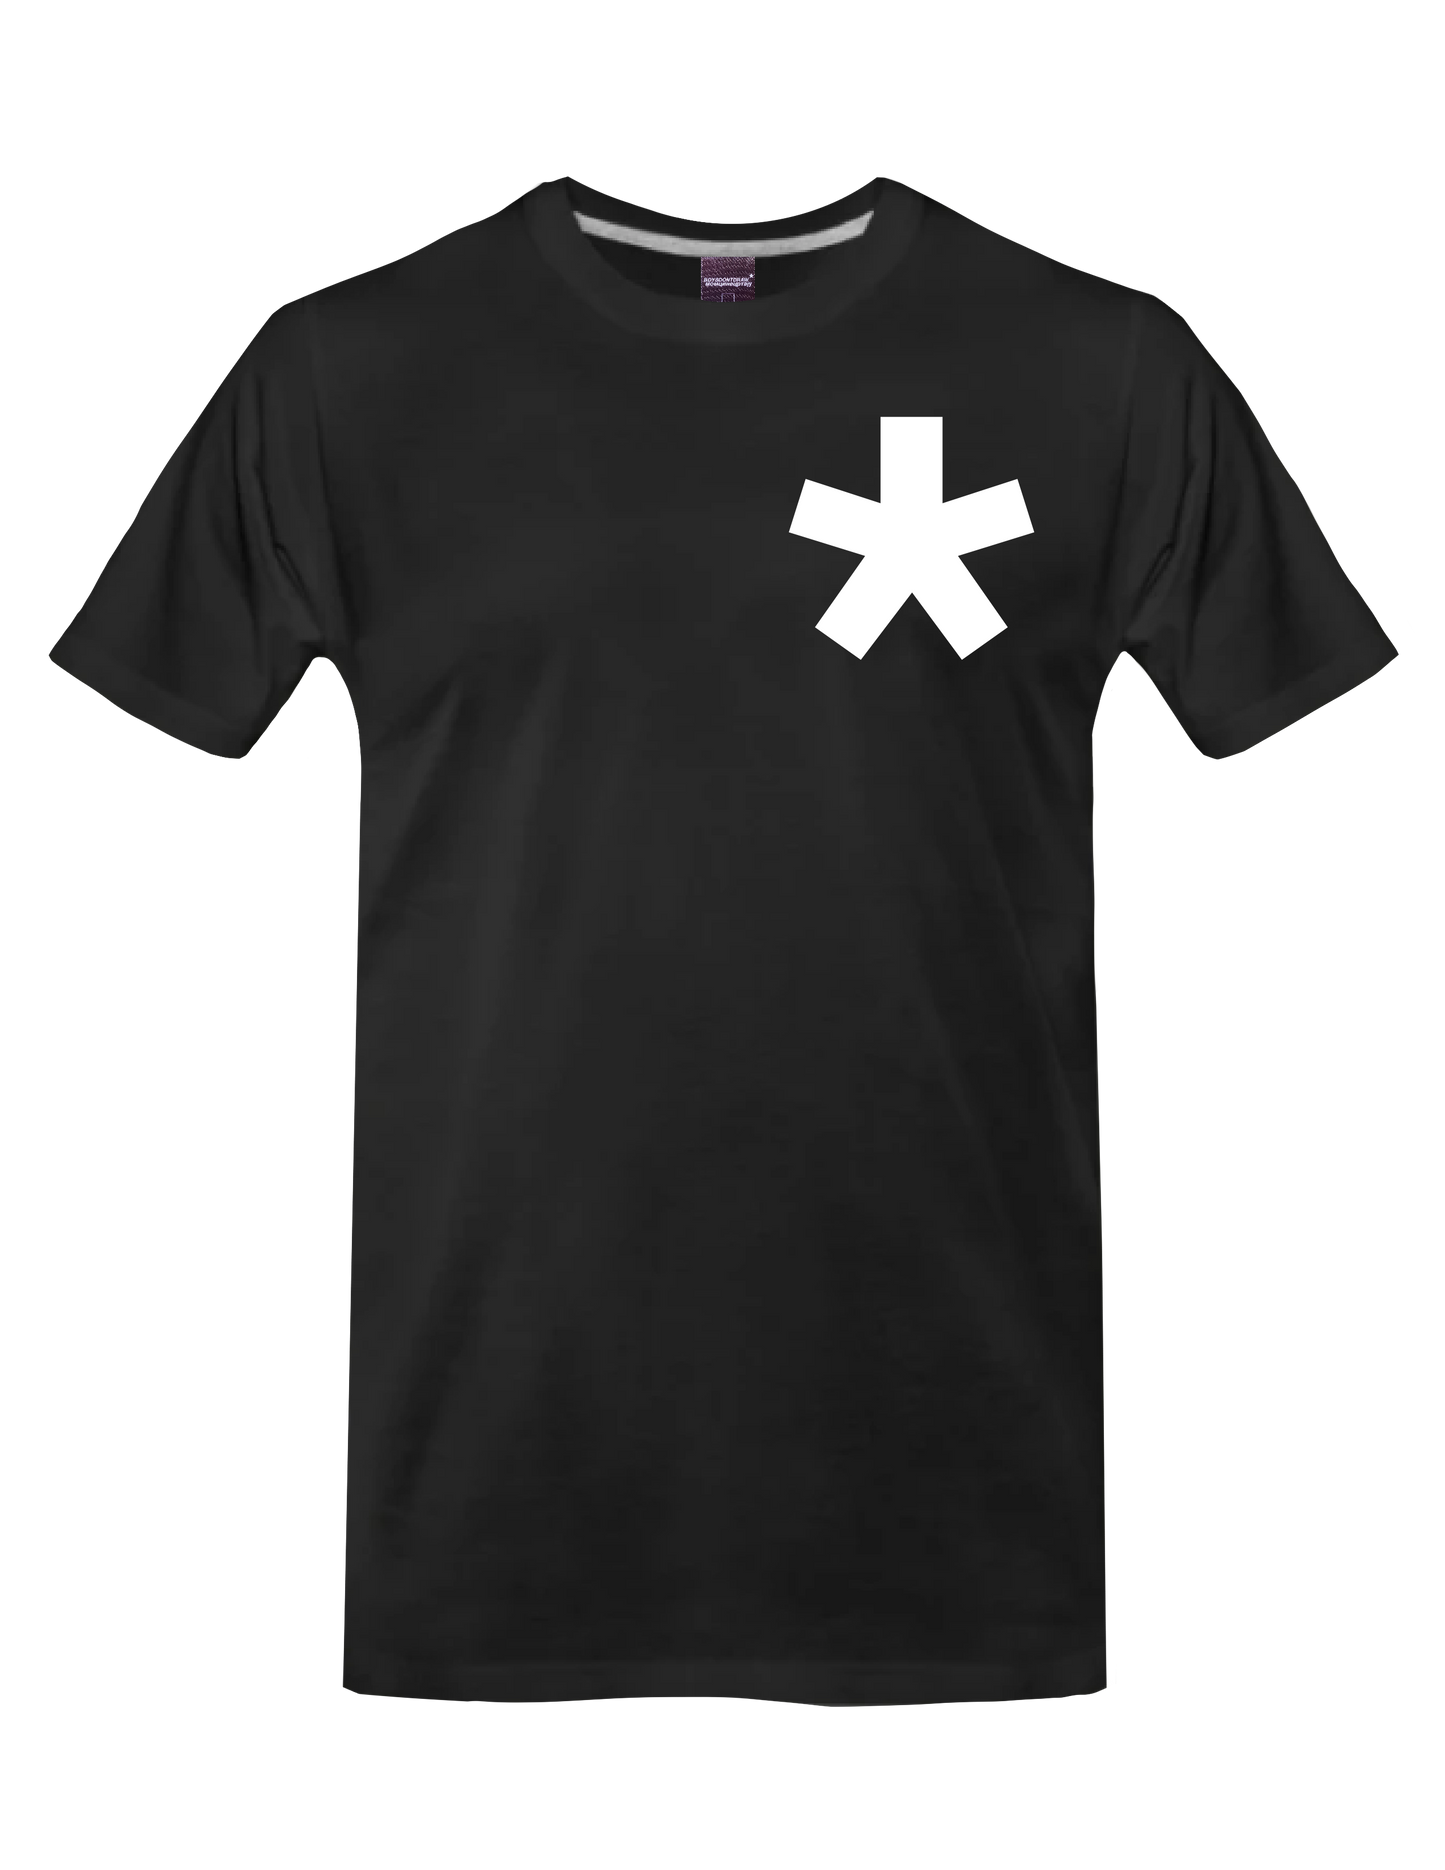 THE WEEKND - STARBOY (Black) - T-Shirt by BOYSDONTDRAW